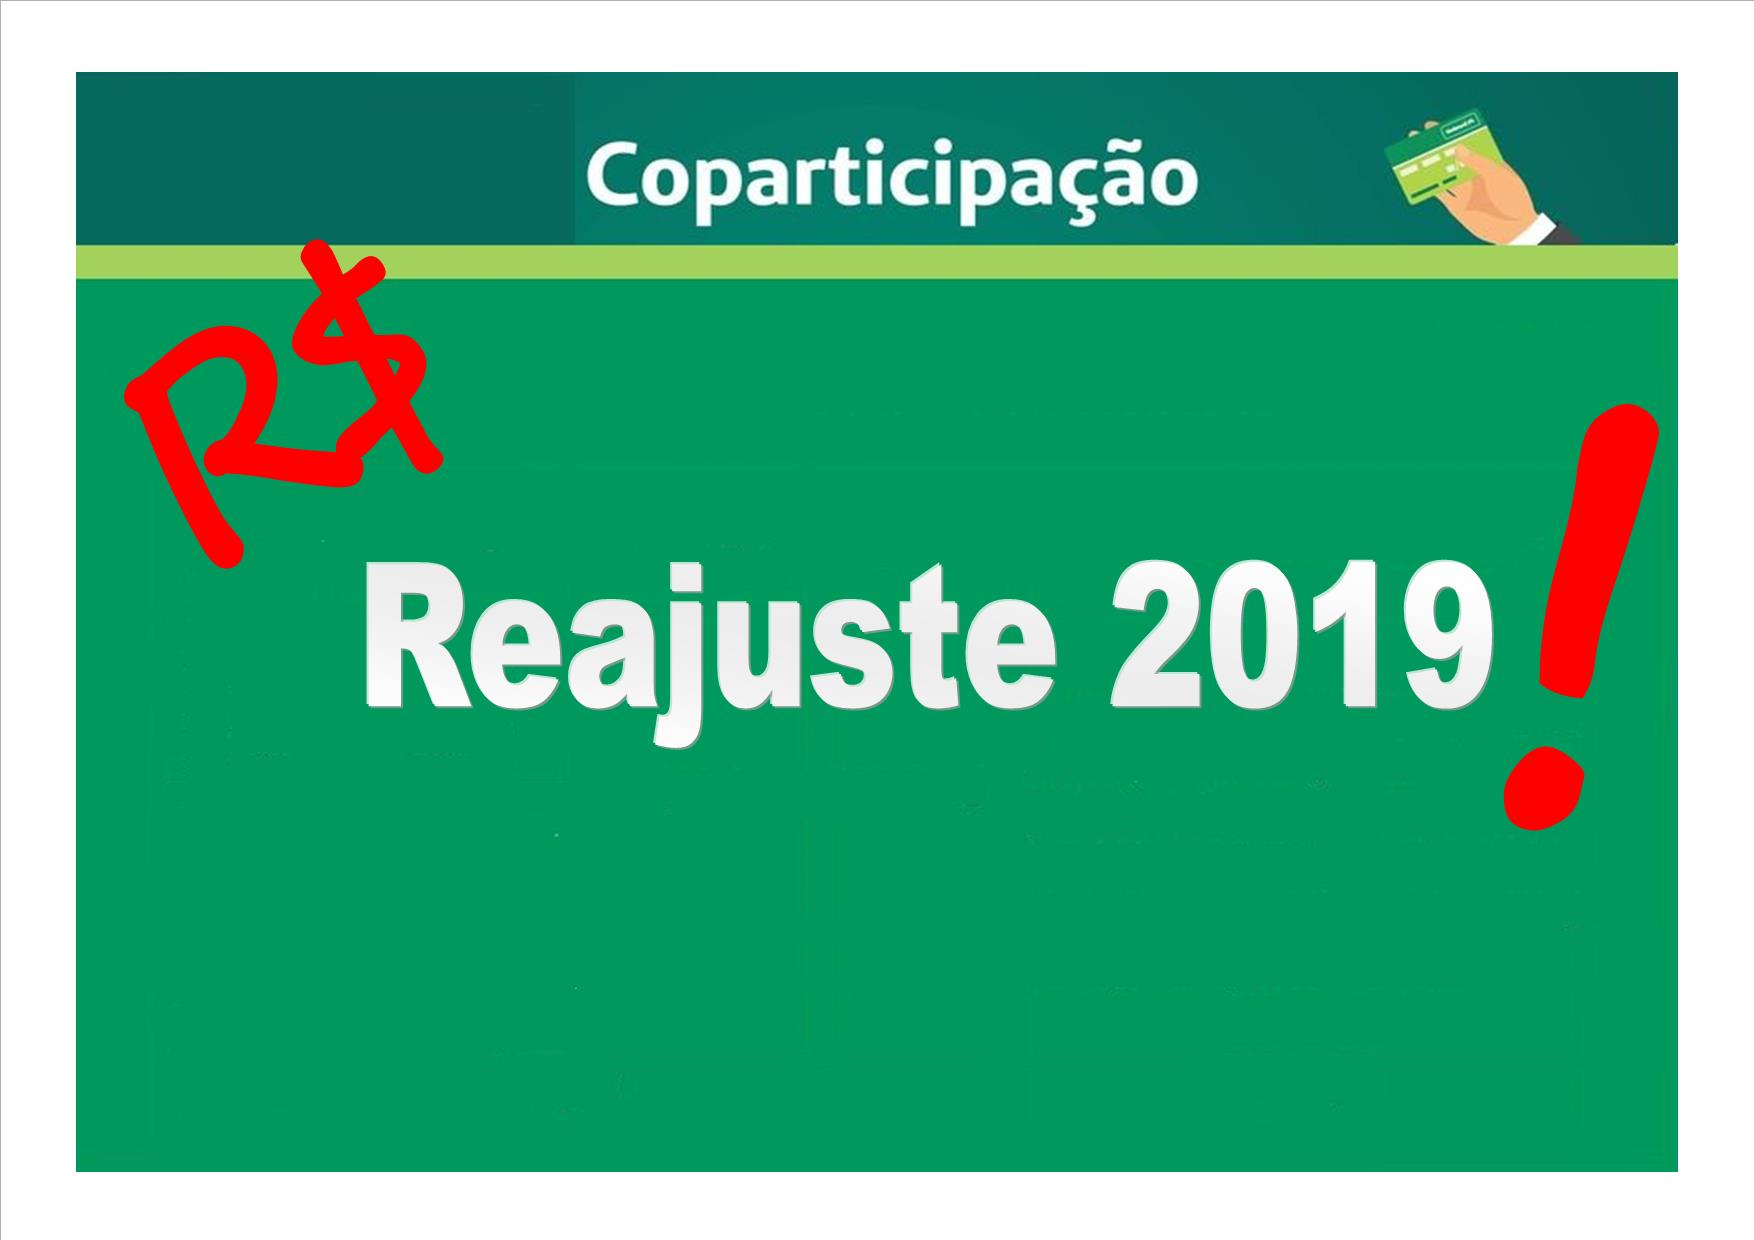 25.01.2019 Reajuste Coparticipacao Unimed 2019